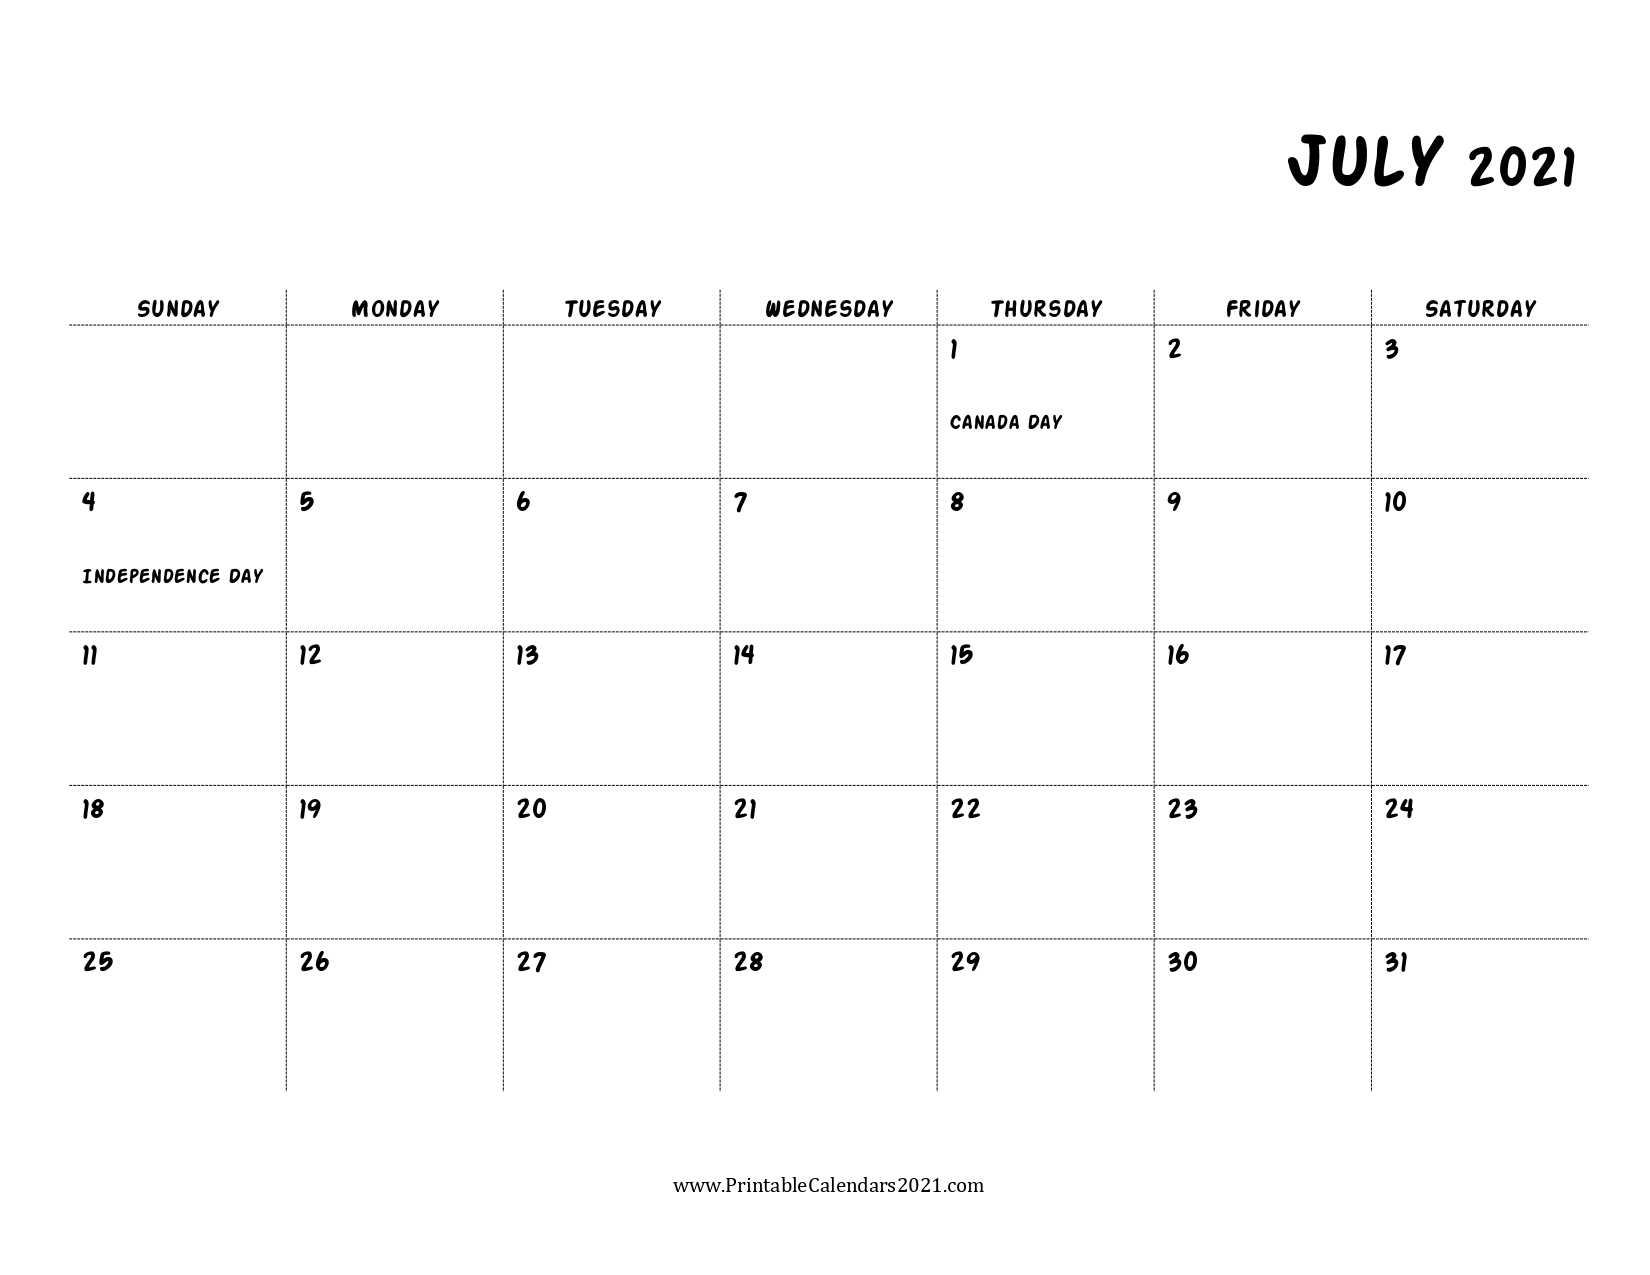 45+ July 2021 Calendar Printable, July 2021 Calendar Pdf